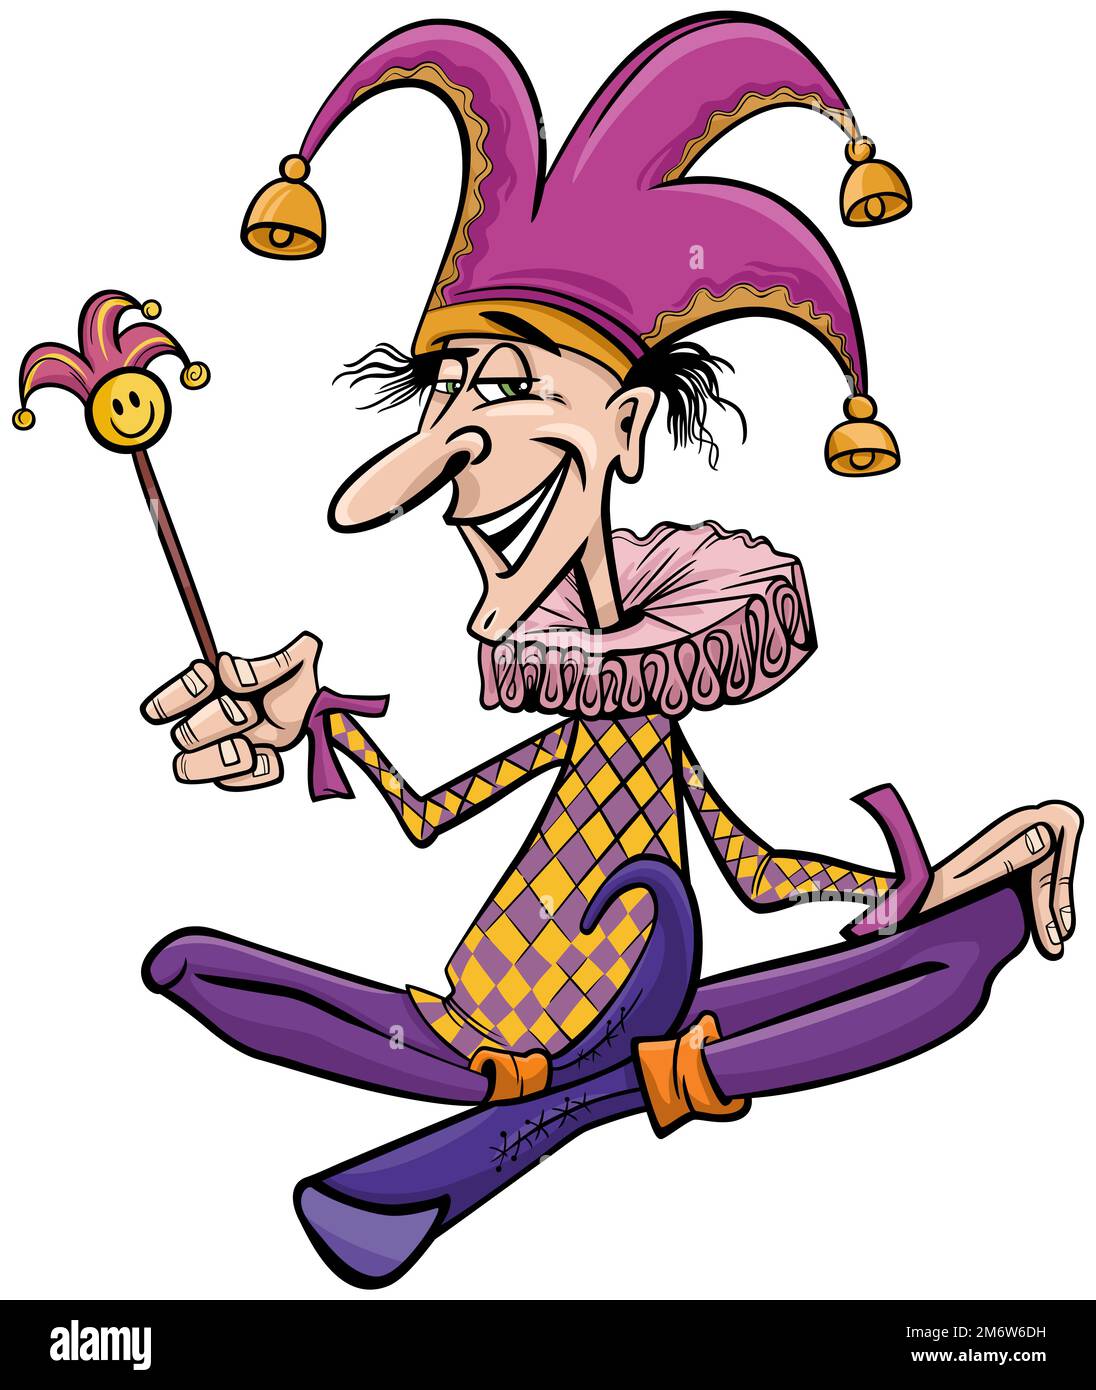 Cartoon jester or clown comic character Stock Photo